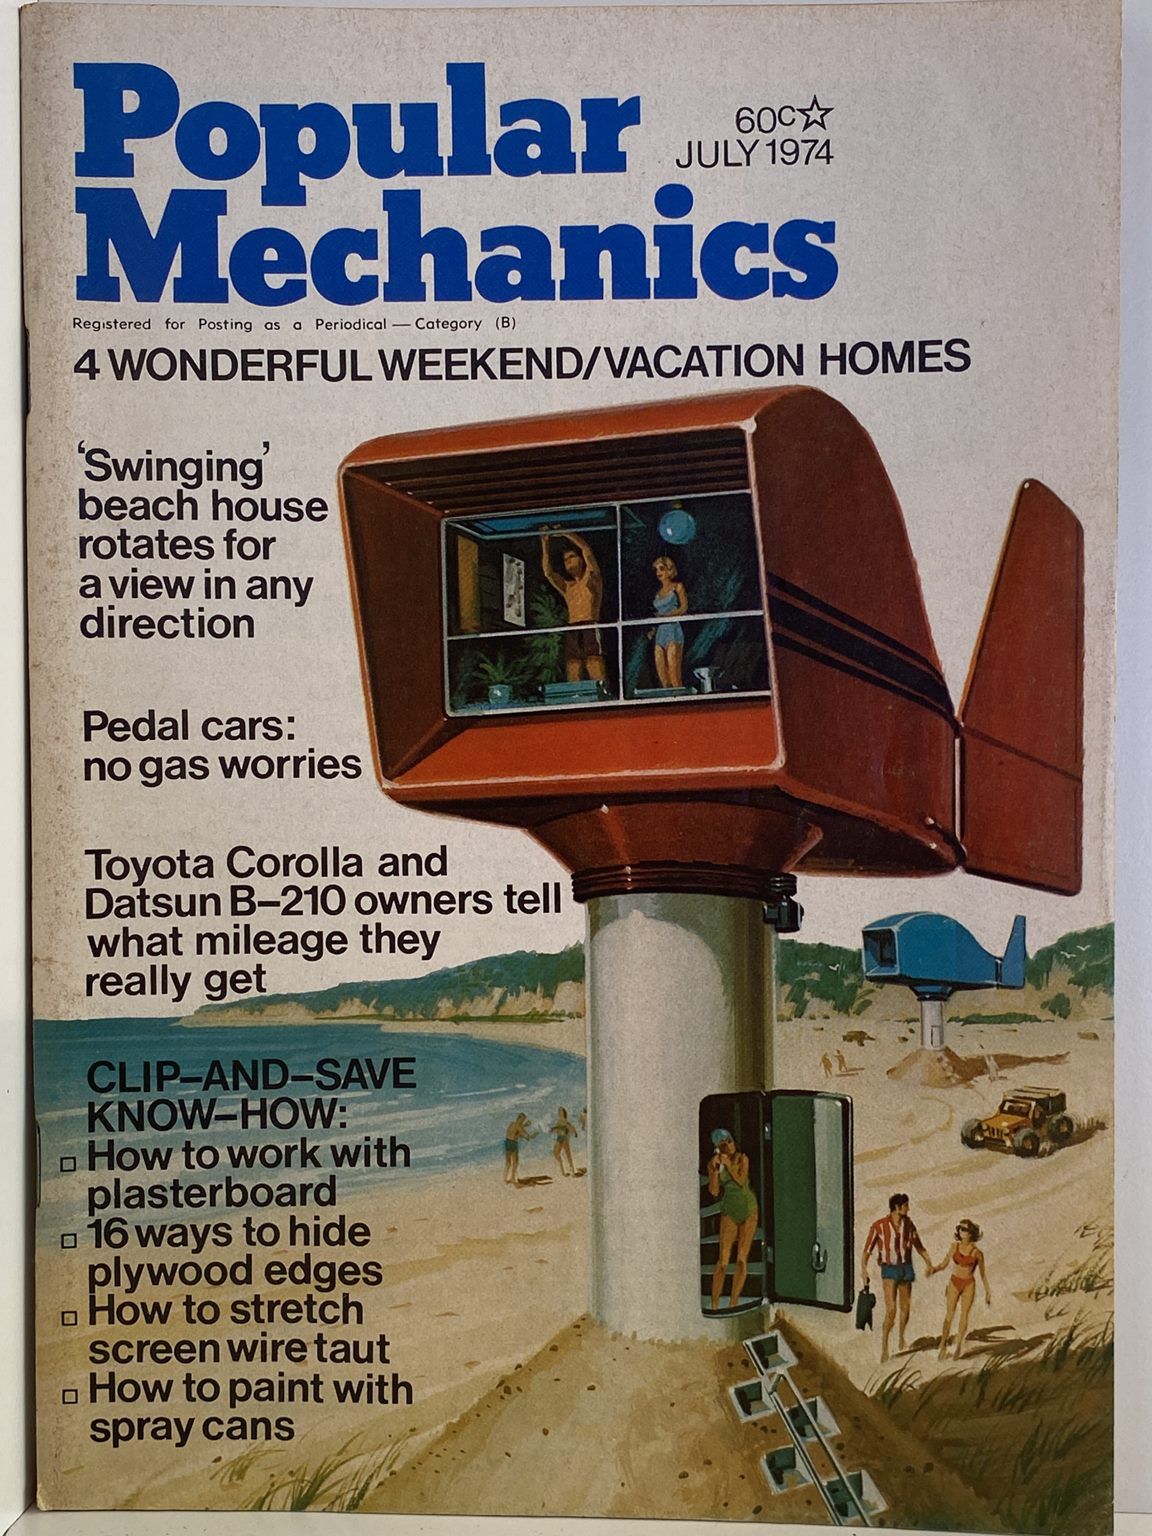 VINTAGE MAGAZINE: Popular Mechanics - Vol. 141, No. 5 - July 1974